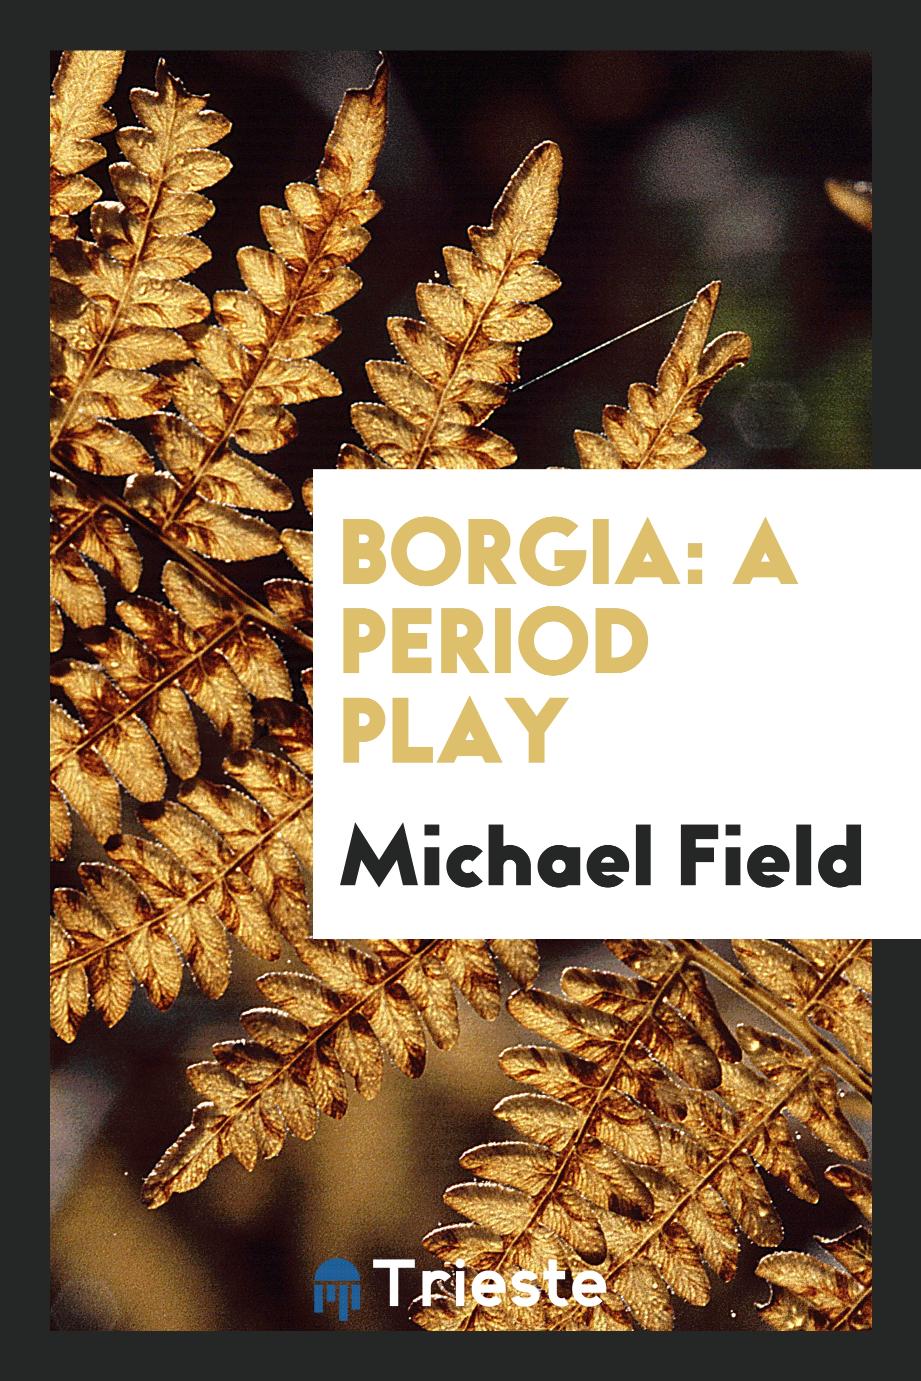 Borgia: a period play